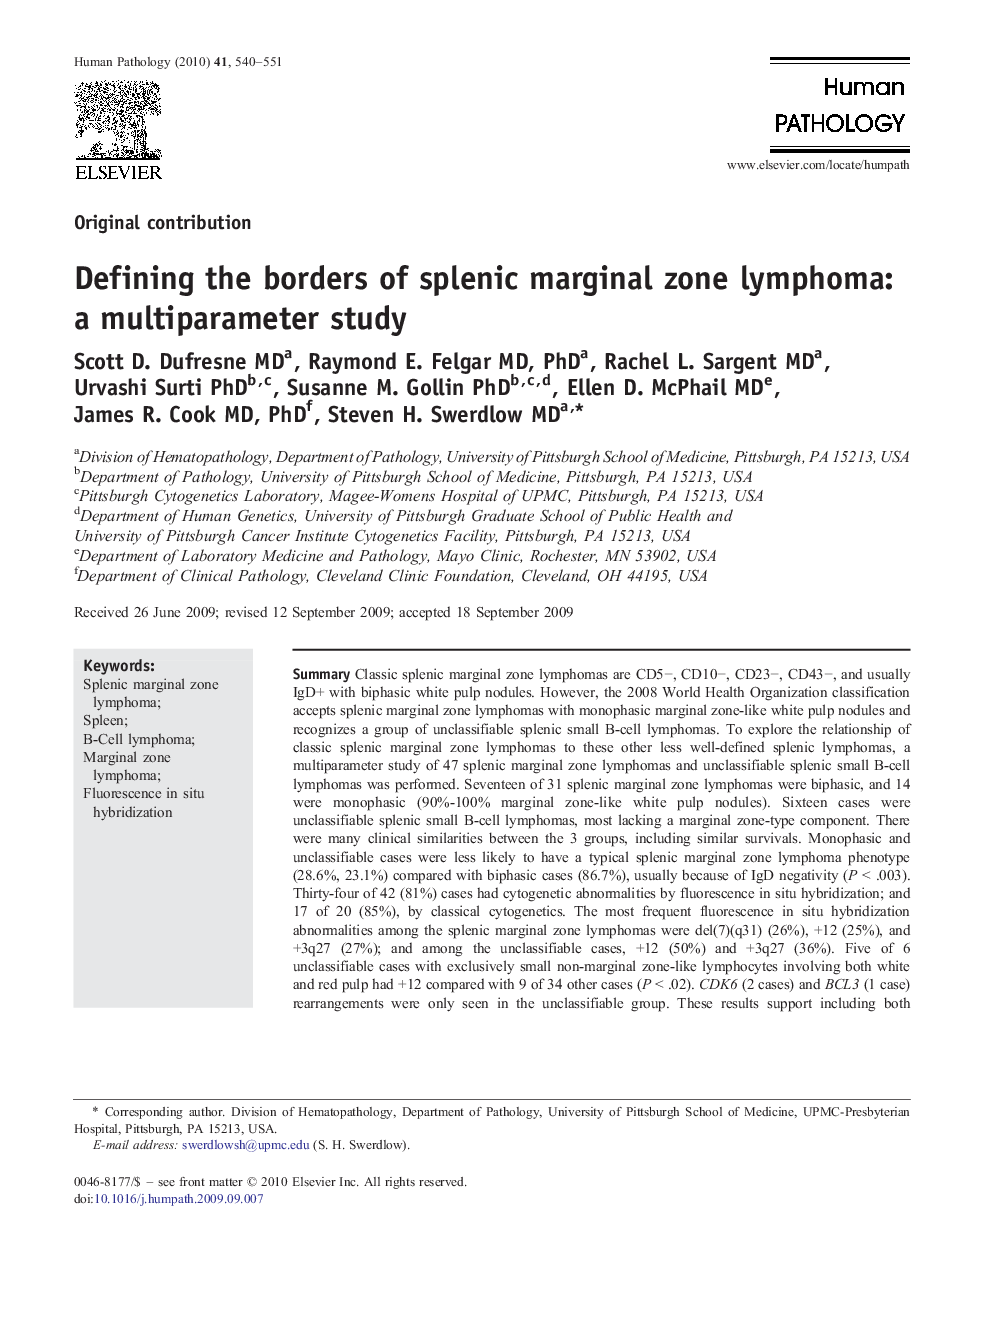 Defining the borders of splenic marginal zone lymphoma: a multiparameter study